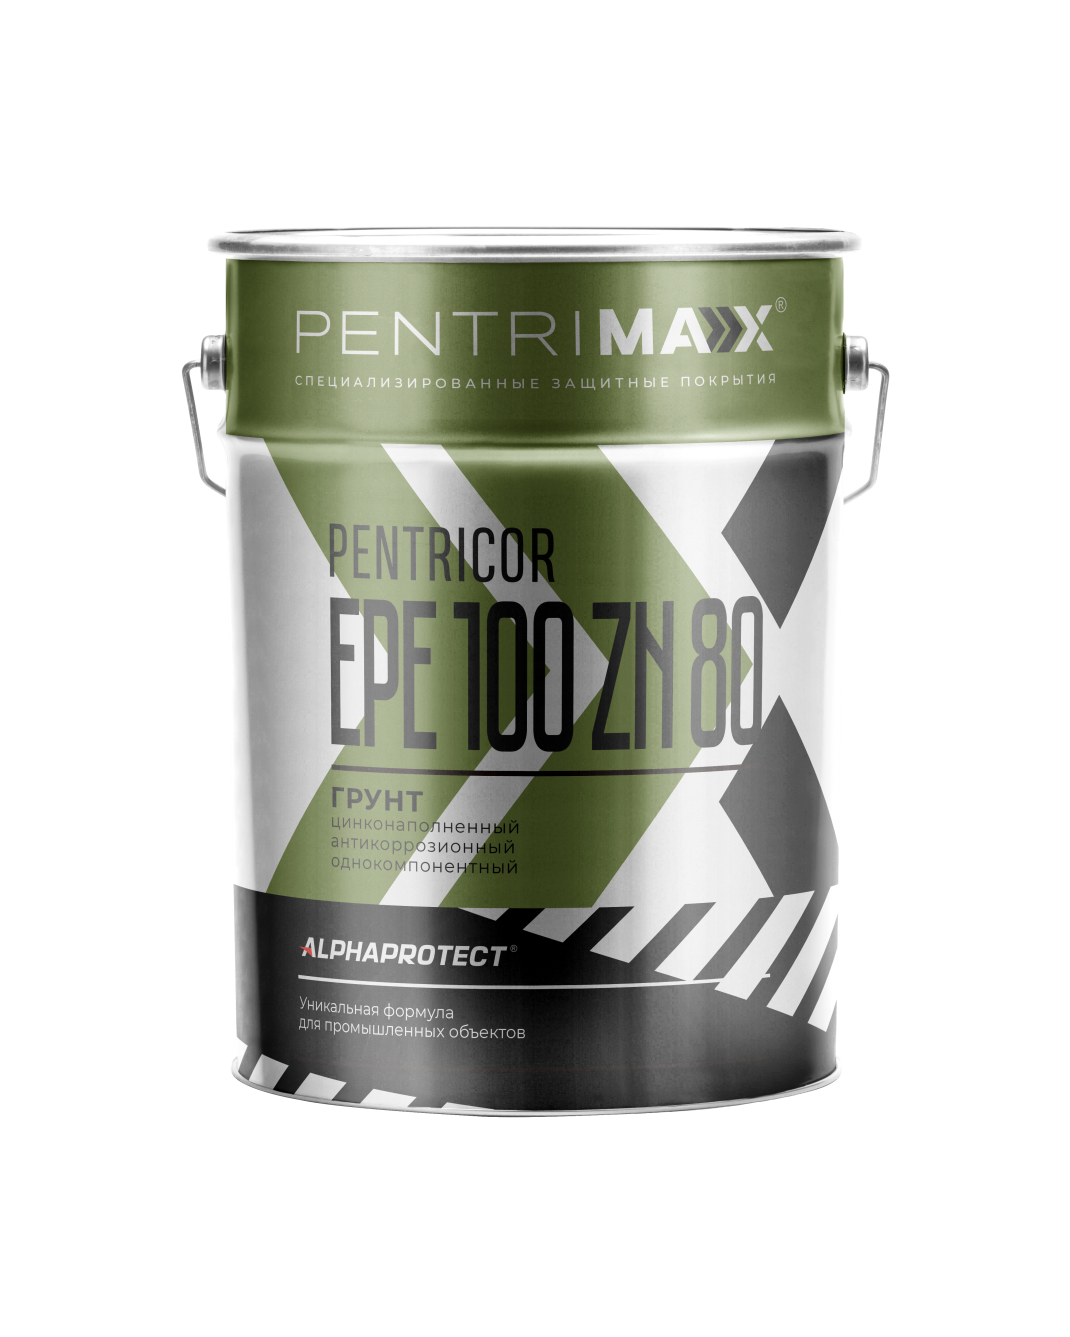 Полиуретановый грунт для металла PENTRICOR EPE 100 Zn 80